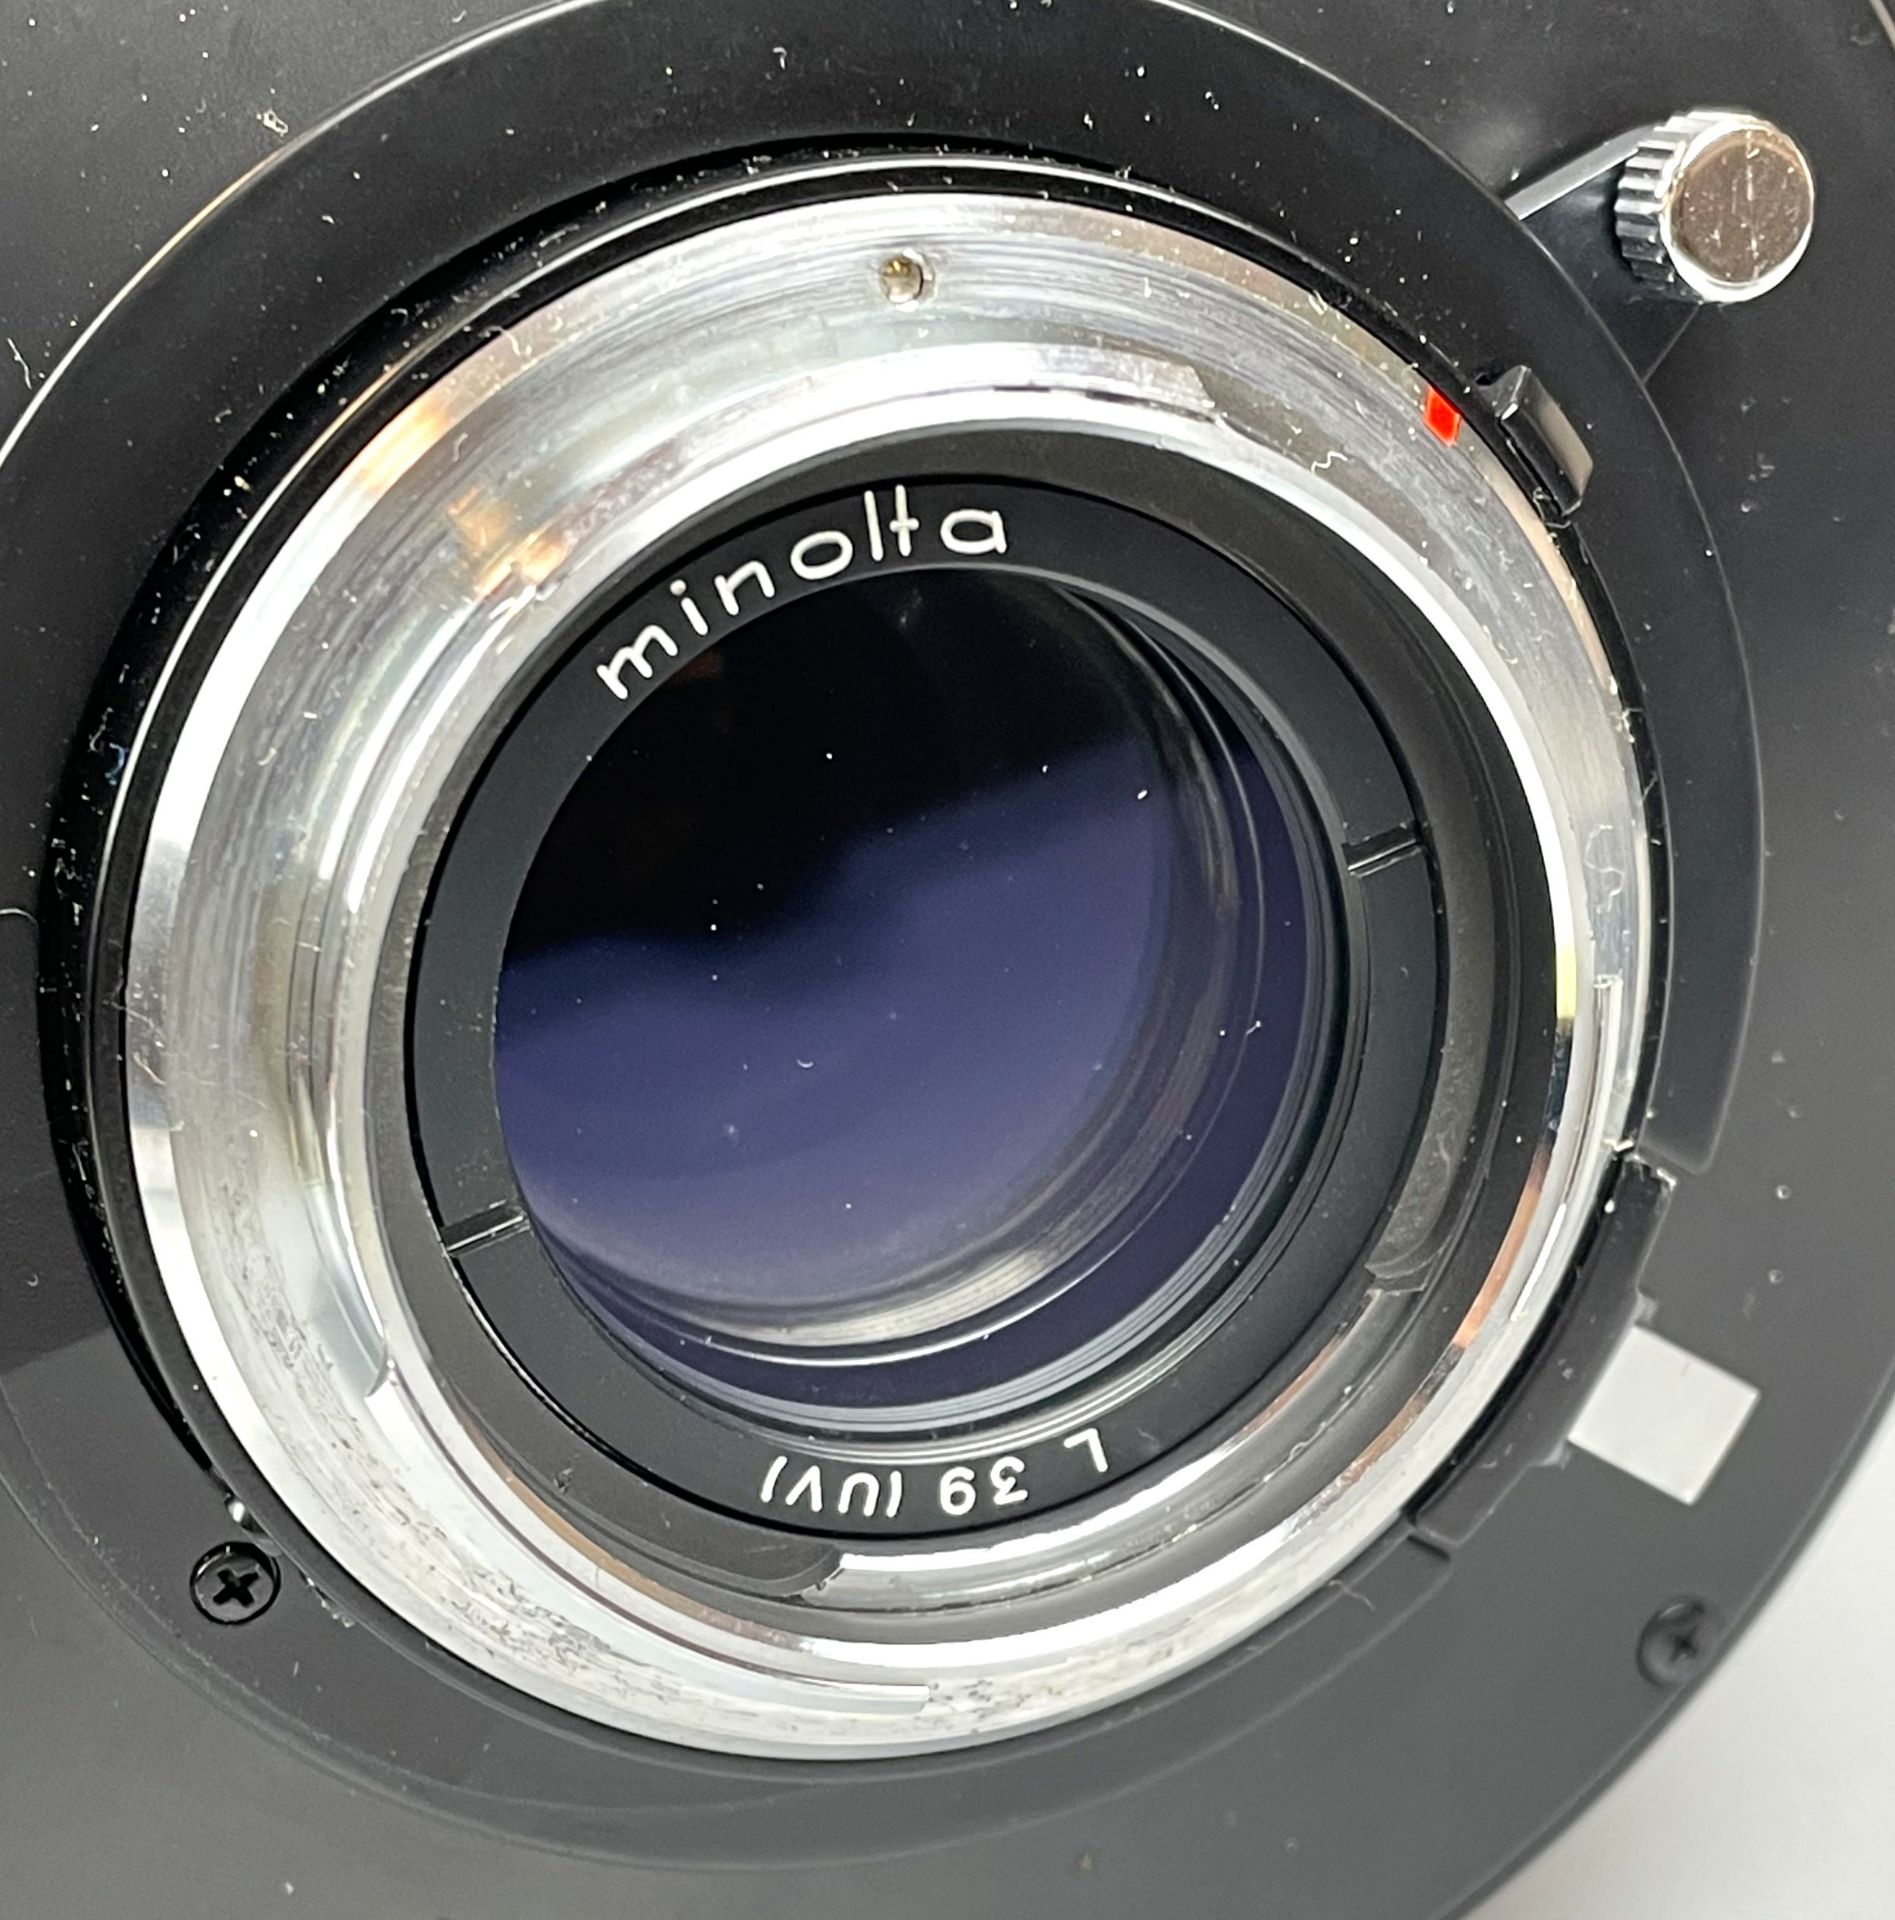 Seltene RF Rokkor-X Minolta MD 800/8 800mm f8 Spiegel Objektiv. - Bild 5 aus 9